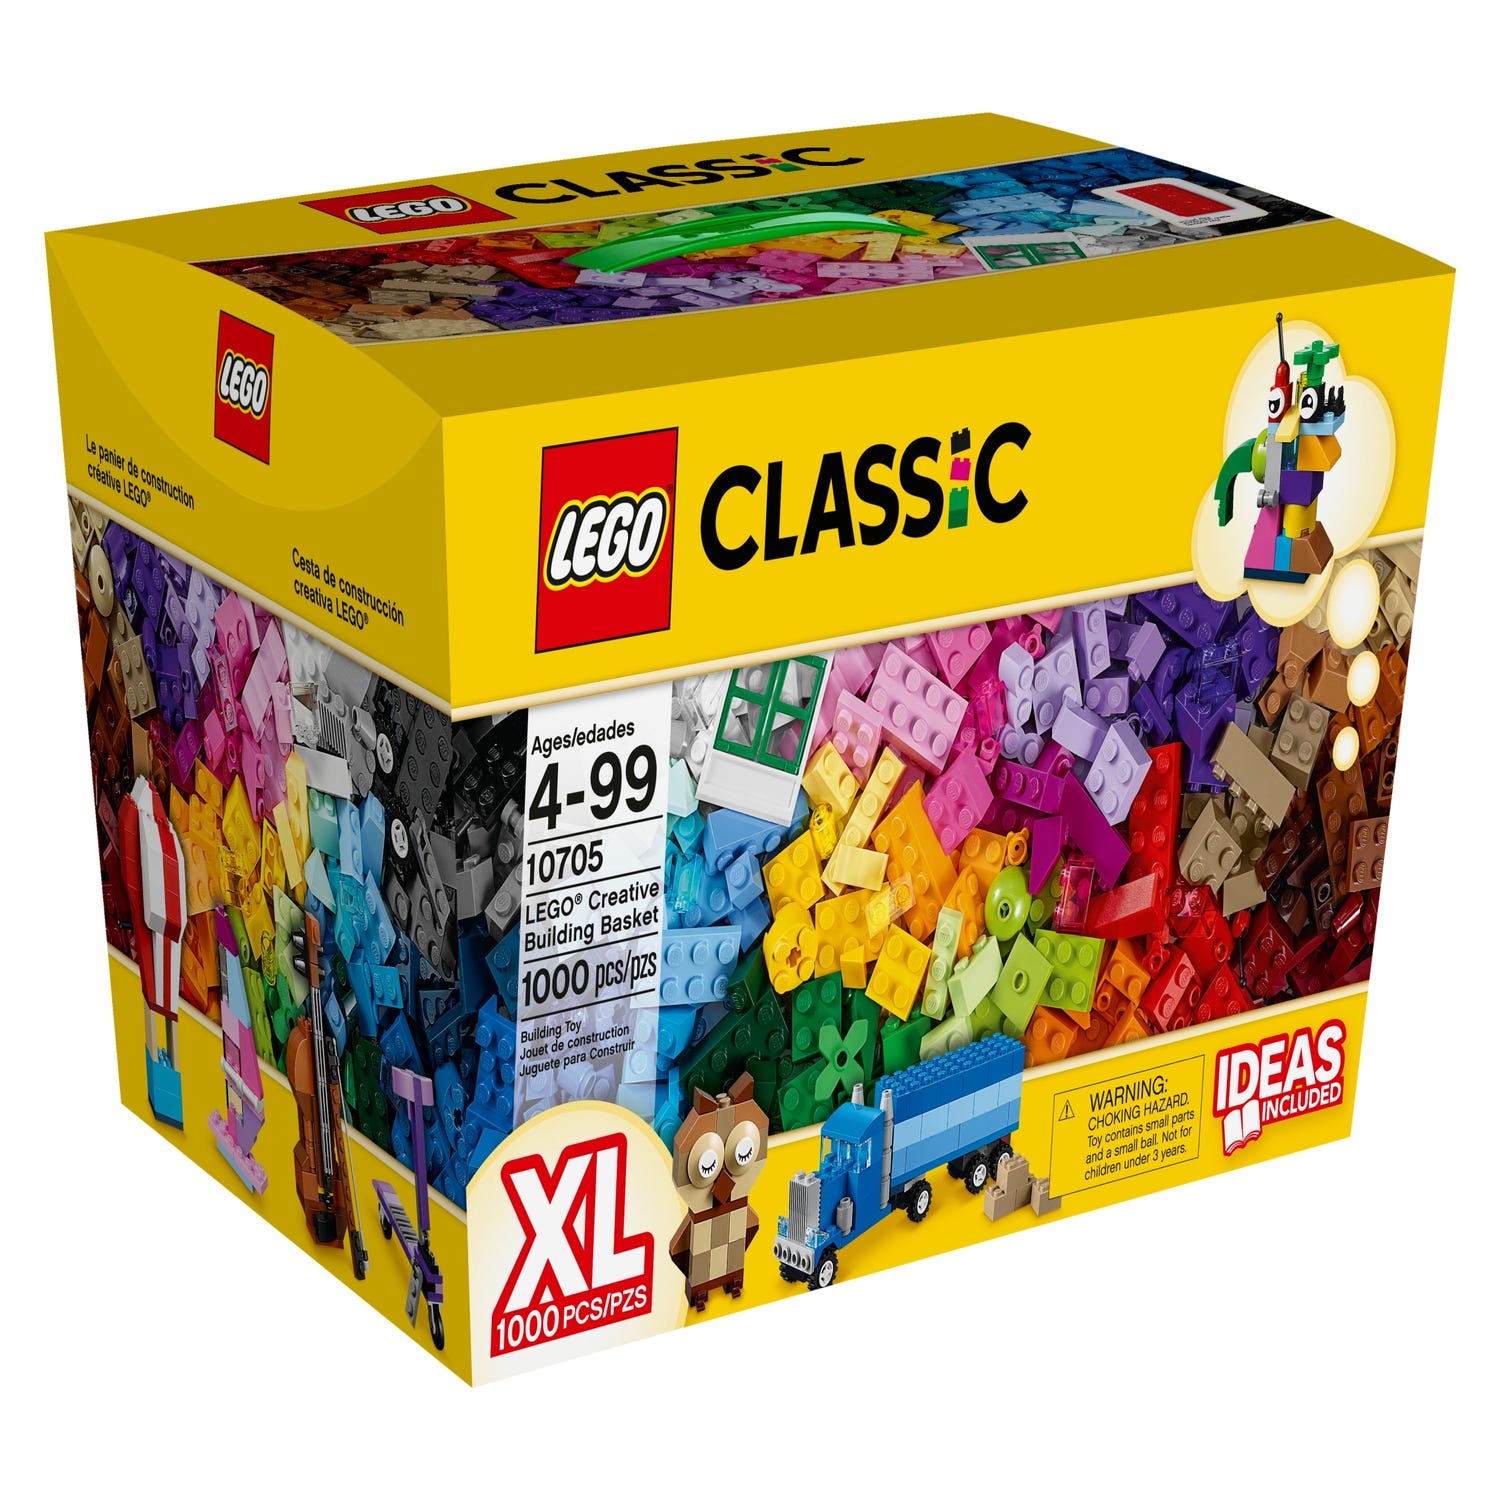 Lego Sets With Over 1000 Pieces | estudioespositoymiguel.com.ar